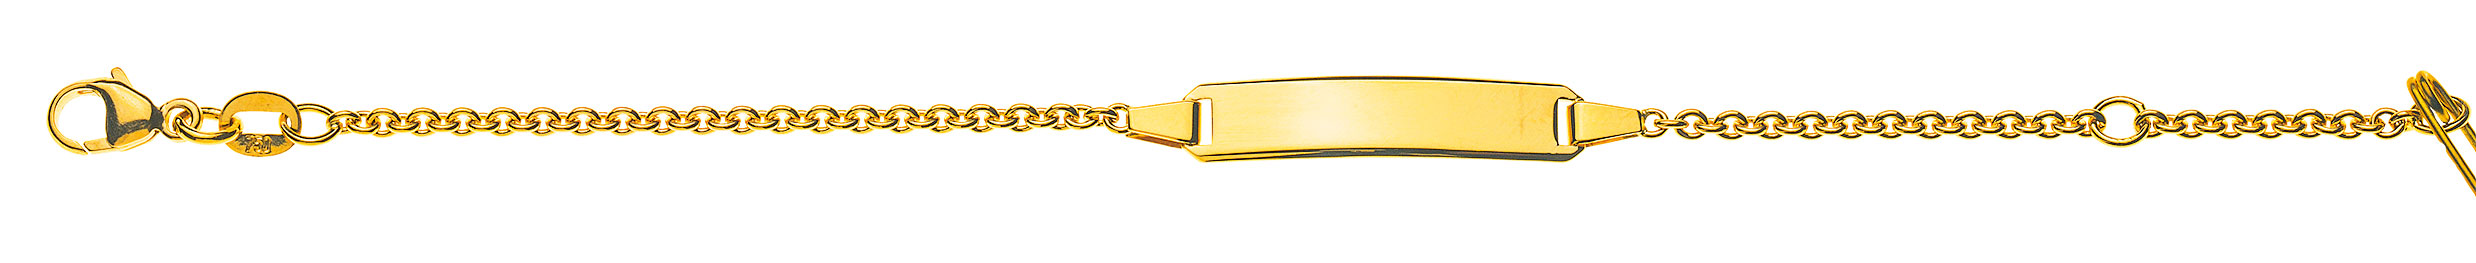 AURONOS Prestige ID-Bracelet 18k Gelbgold Rundankerkette 16cm